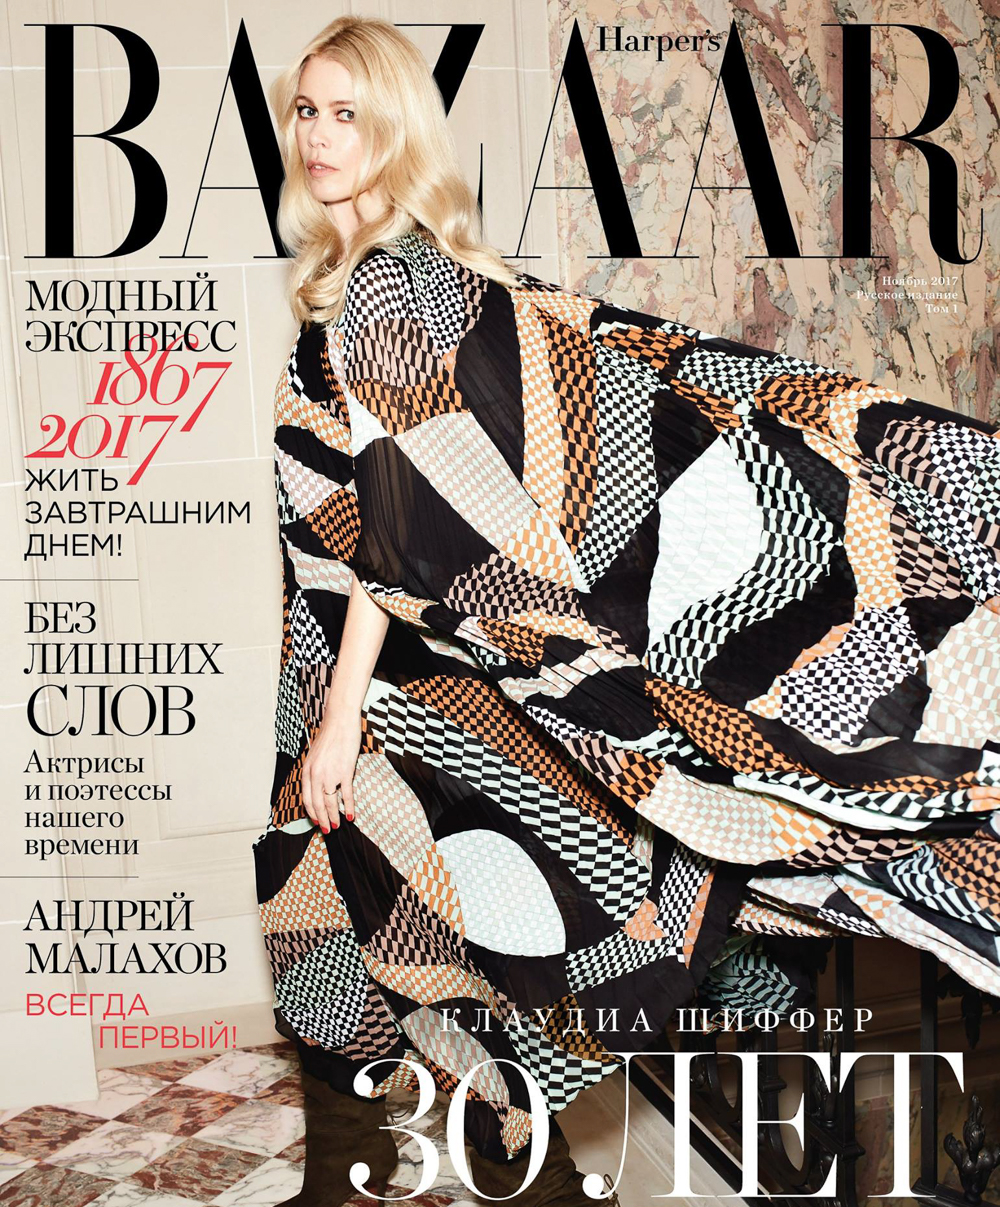 Harper's Bazaar Russia November 2017 Cover Story Editorial